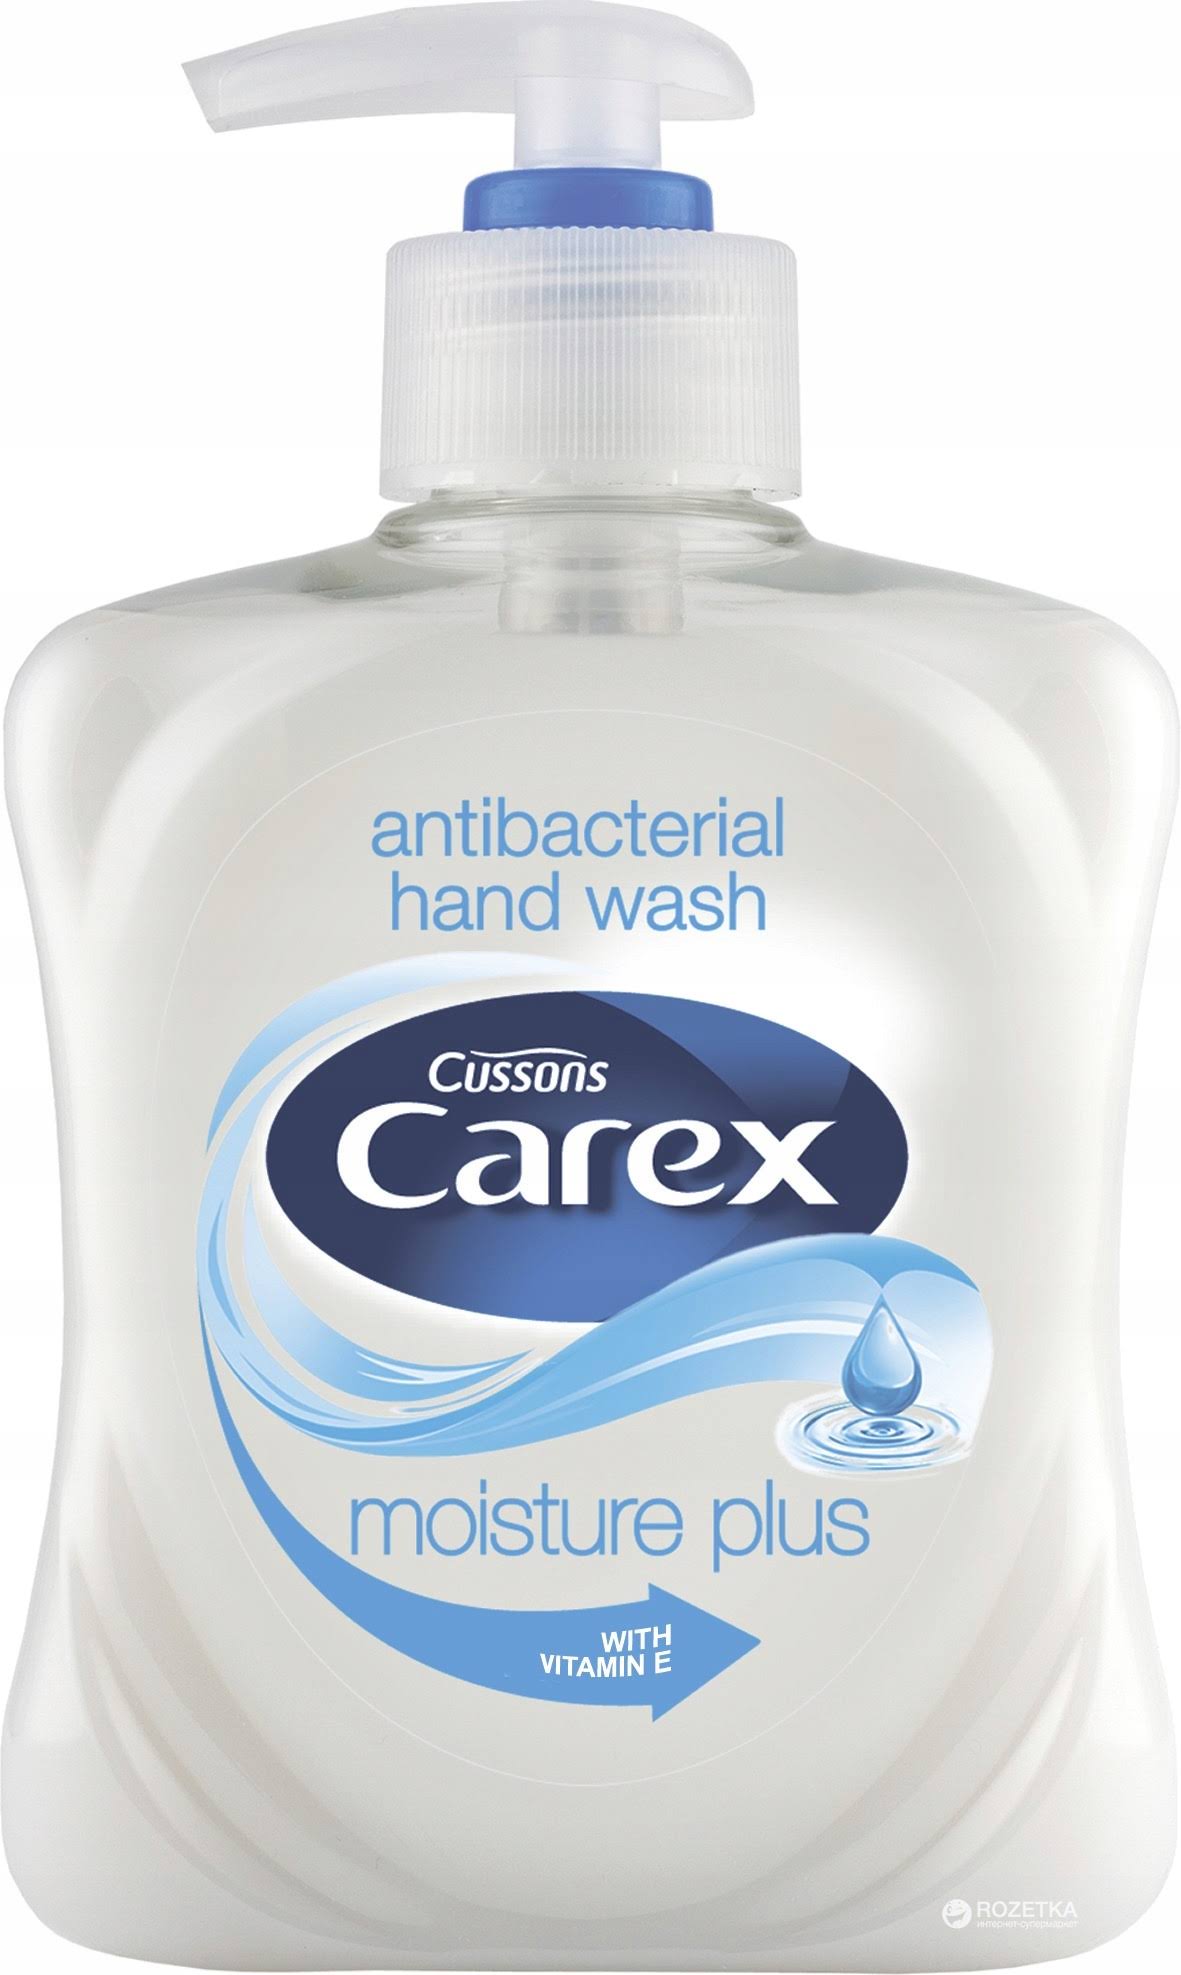 Carex Moisture Plus Antibacterial Hand Wash - 250ml